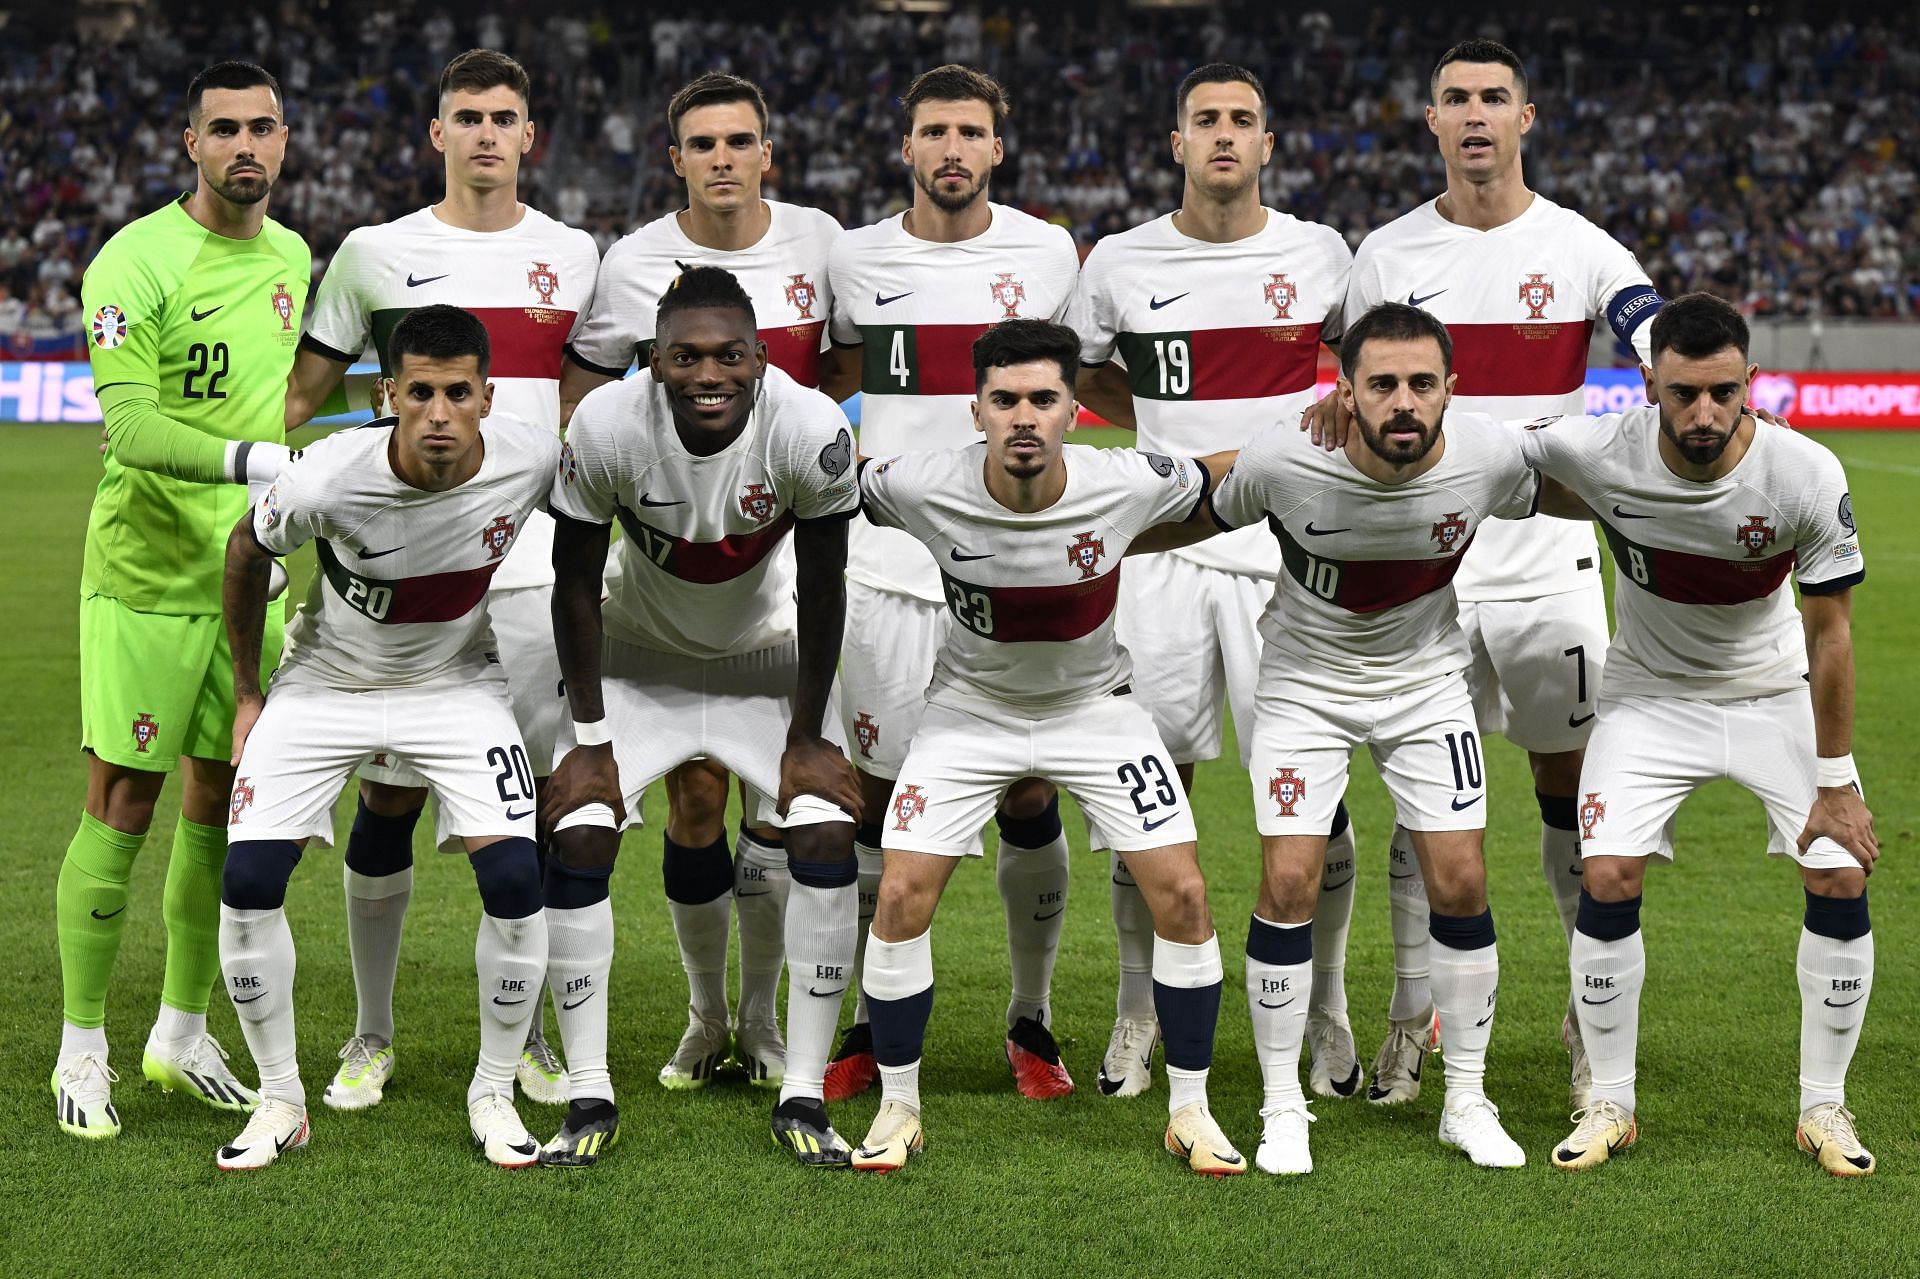 slovakia national football team vs portugal national football team lineups